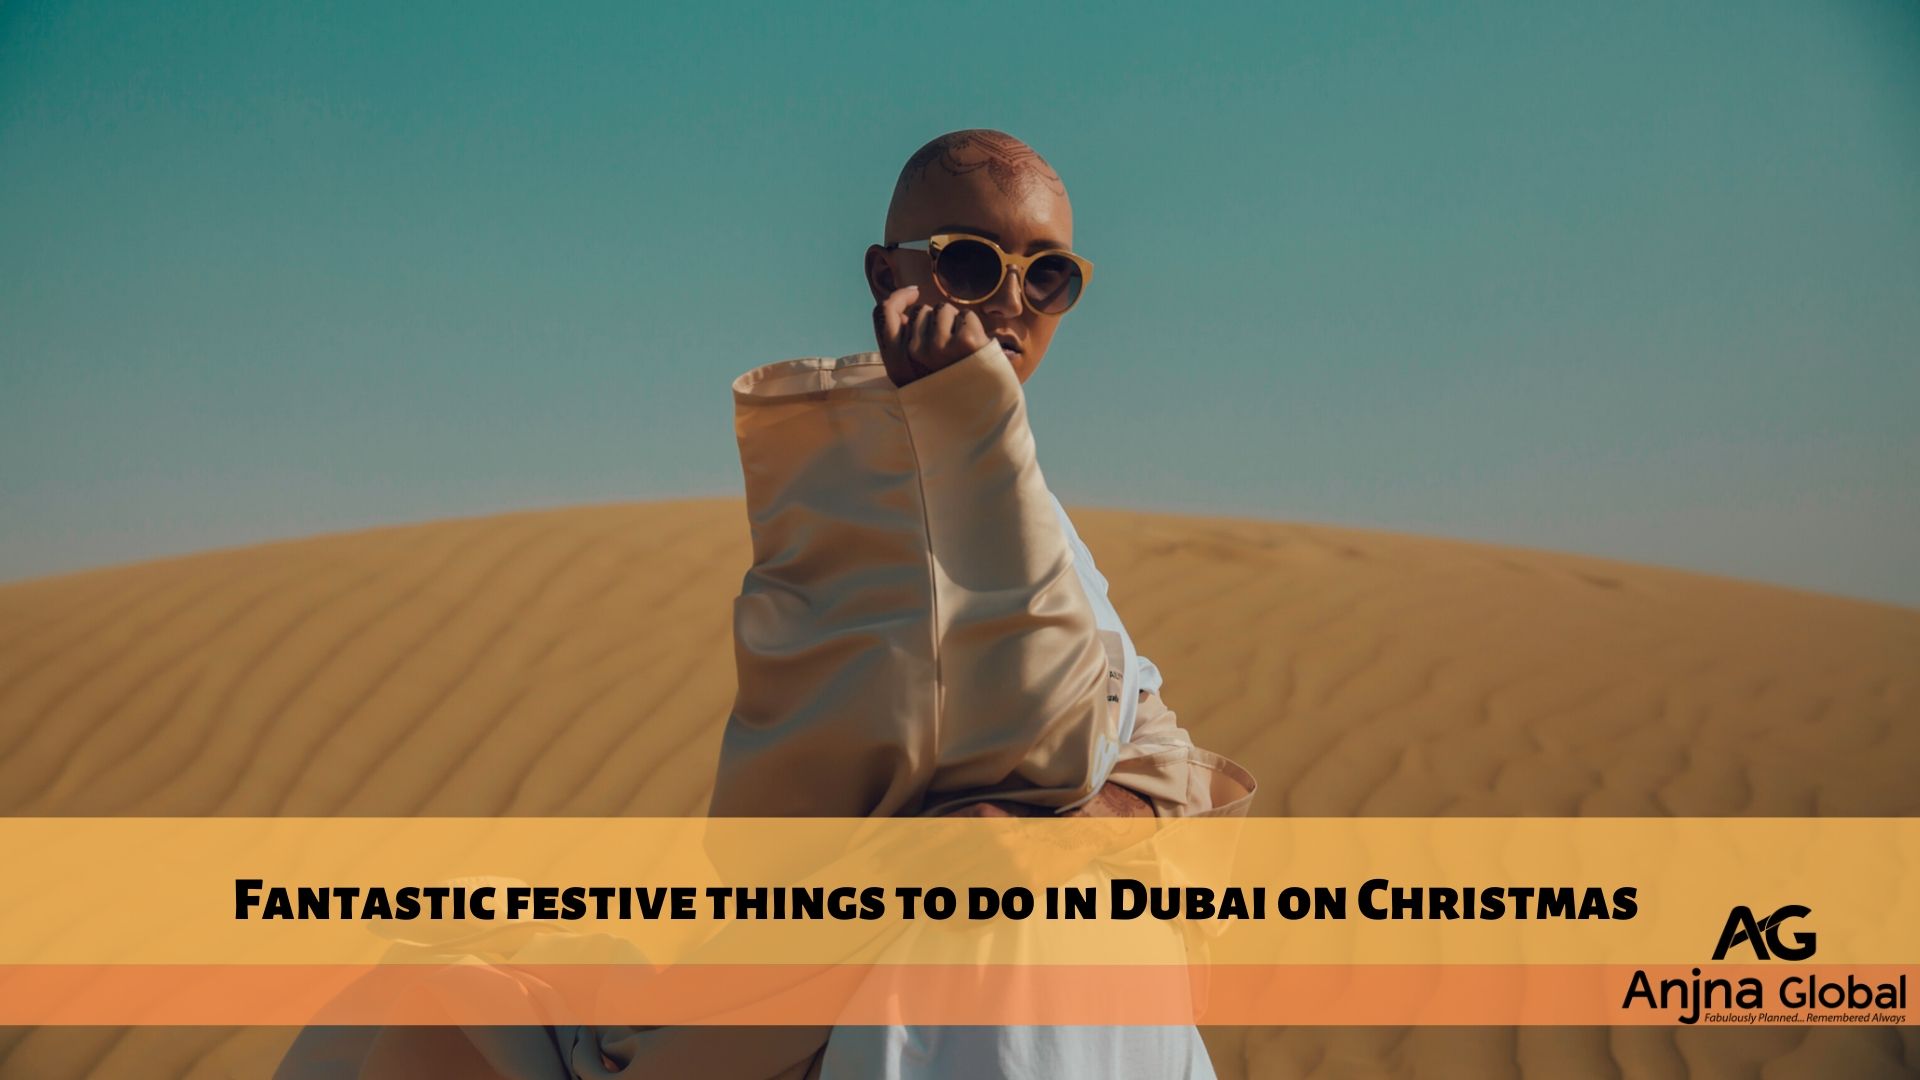 Fantastic festive things to do in Dubai on Christmas